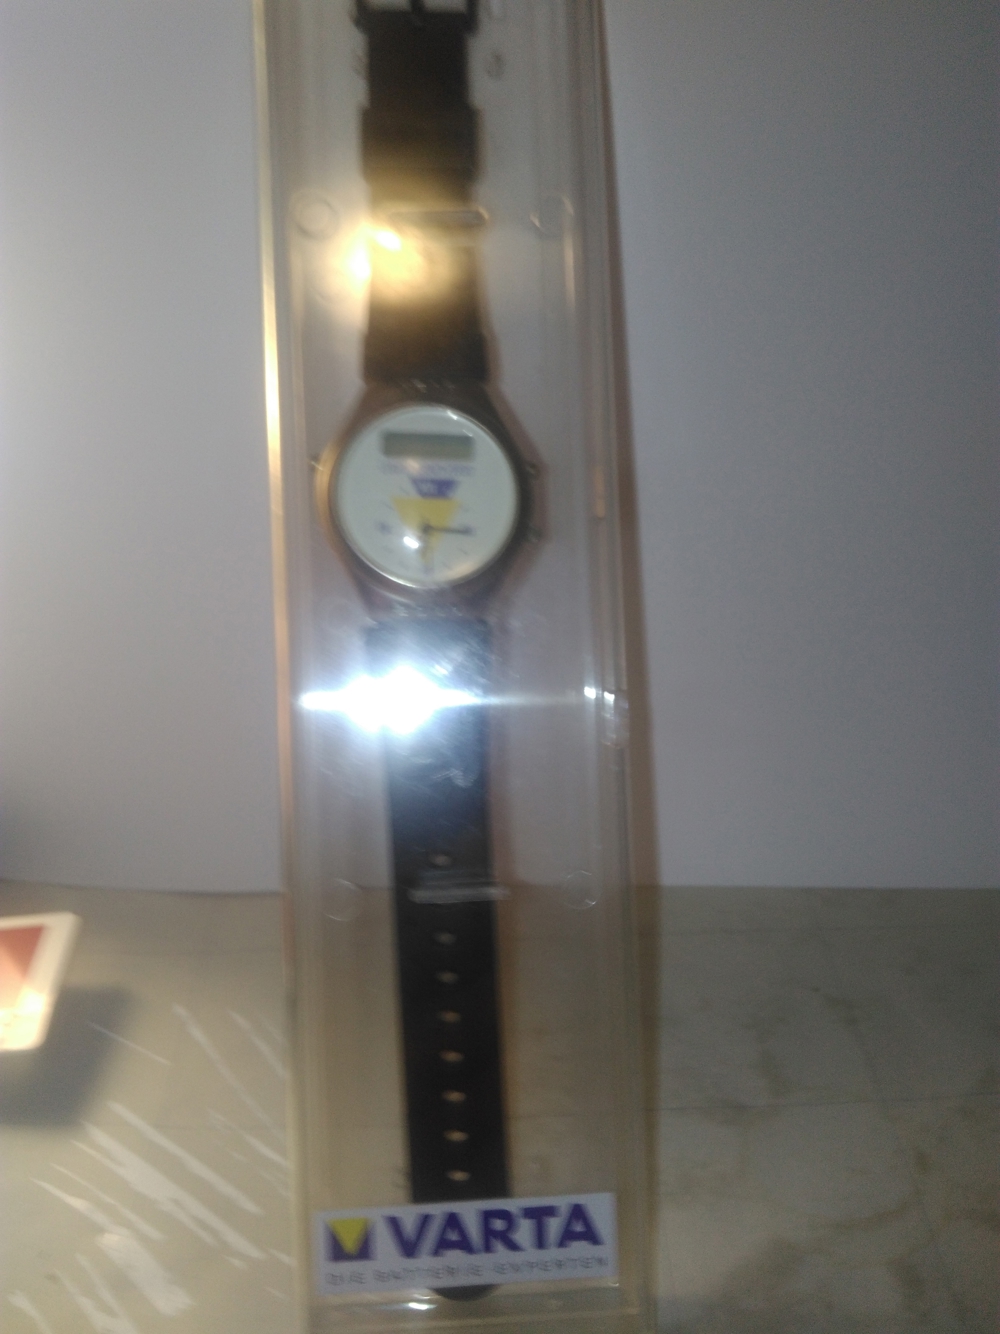 Millennium Armbanduhr "Countdown Jahr 2000 Varta